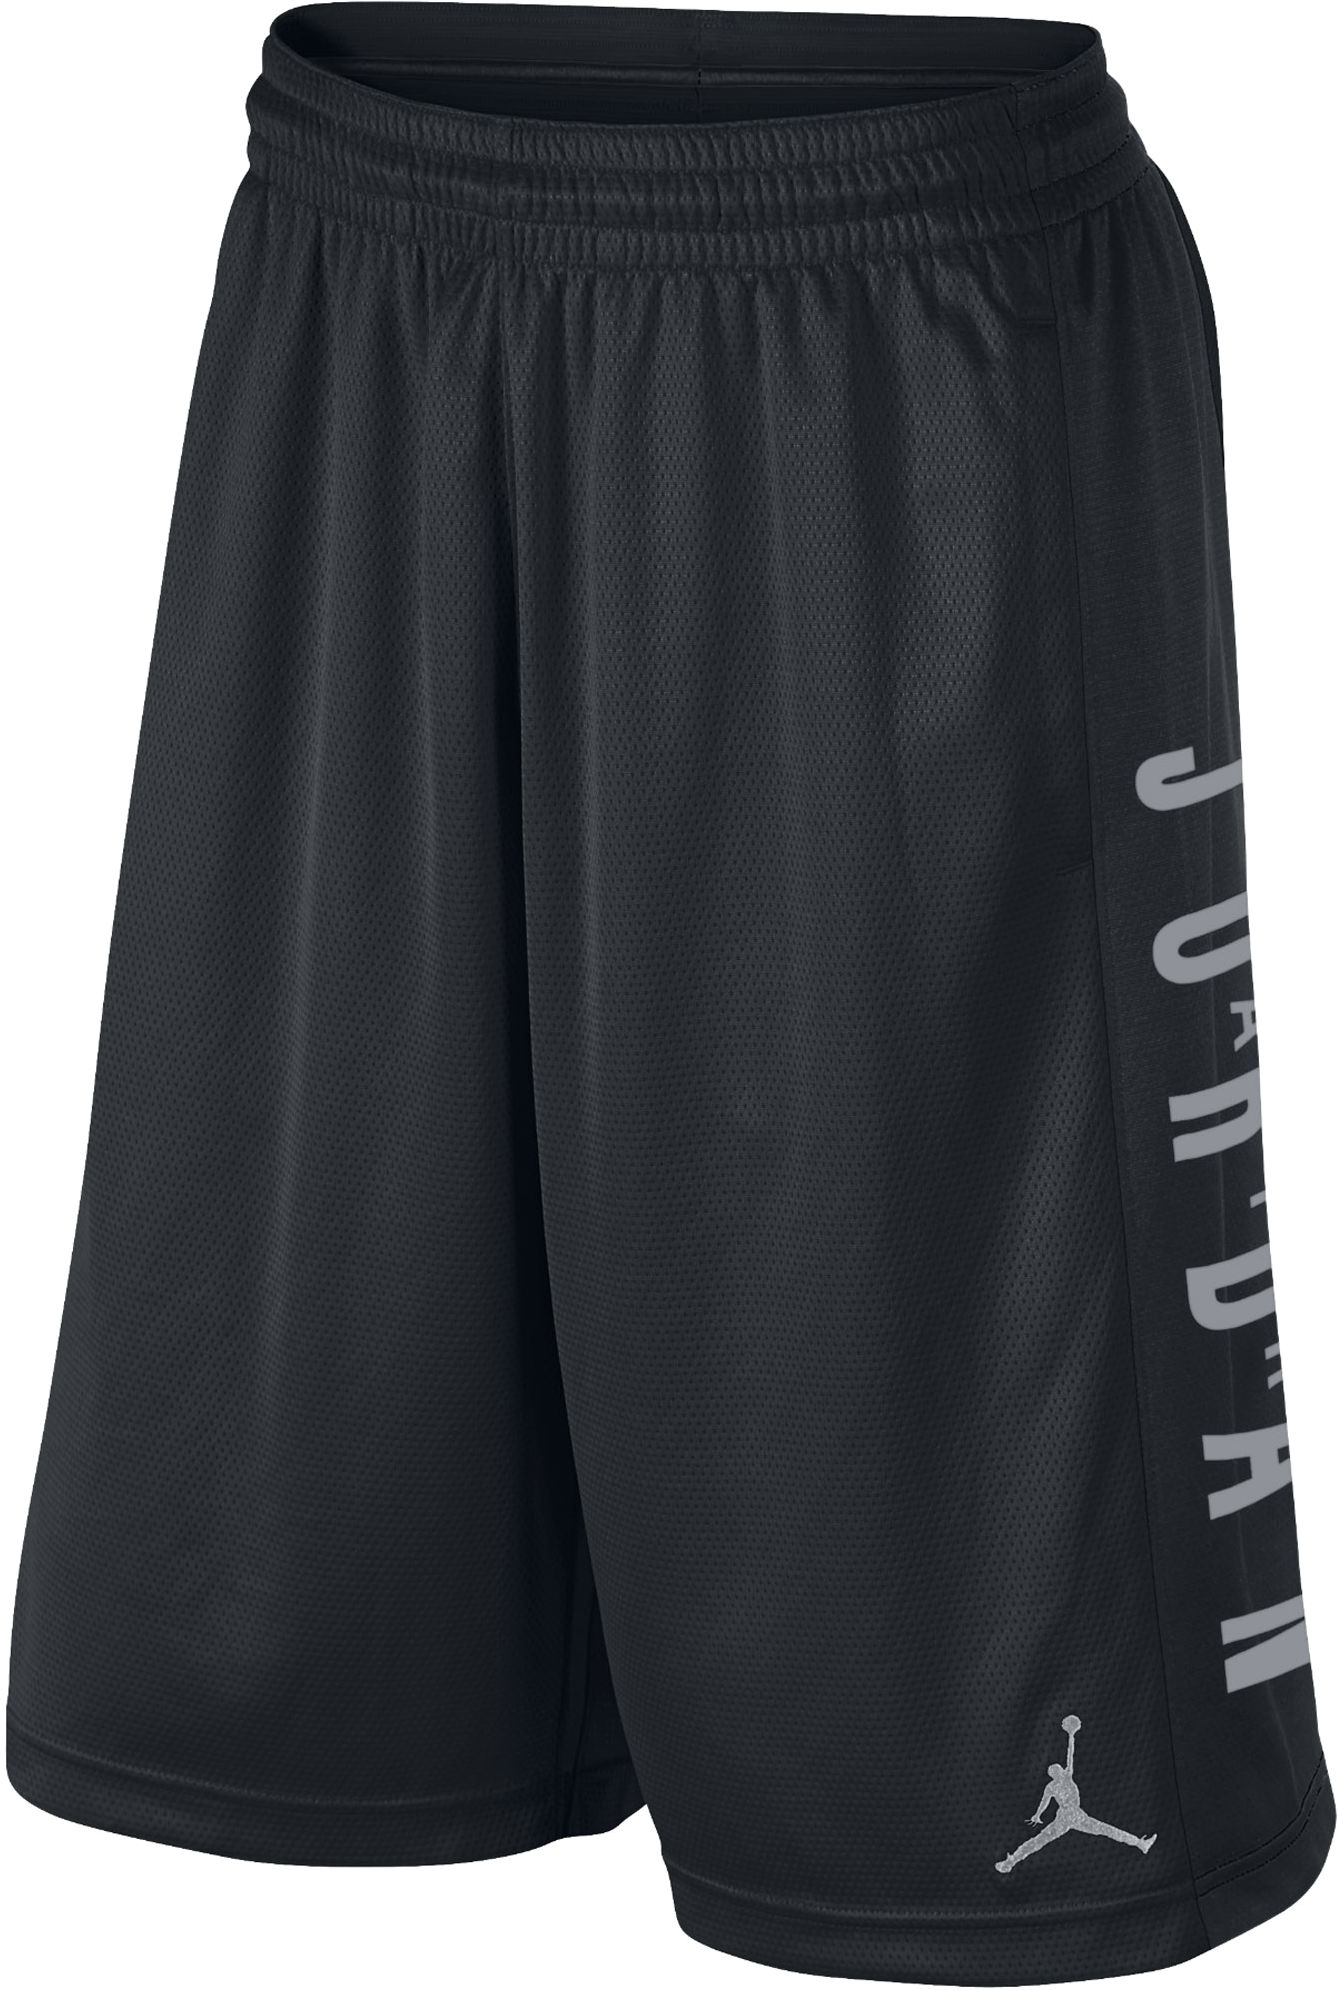 air jordan basketball apparel, Air Jordan Highlight Mens Basketball Shorts (Black/Grey)